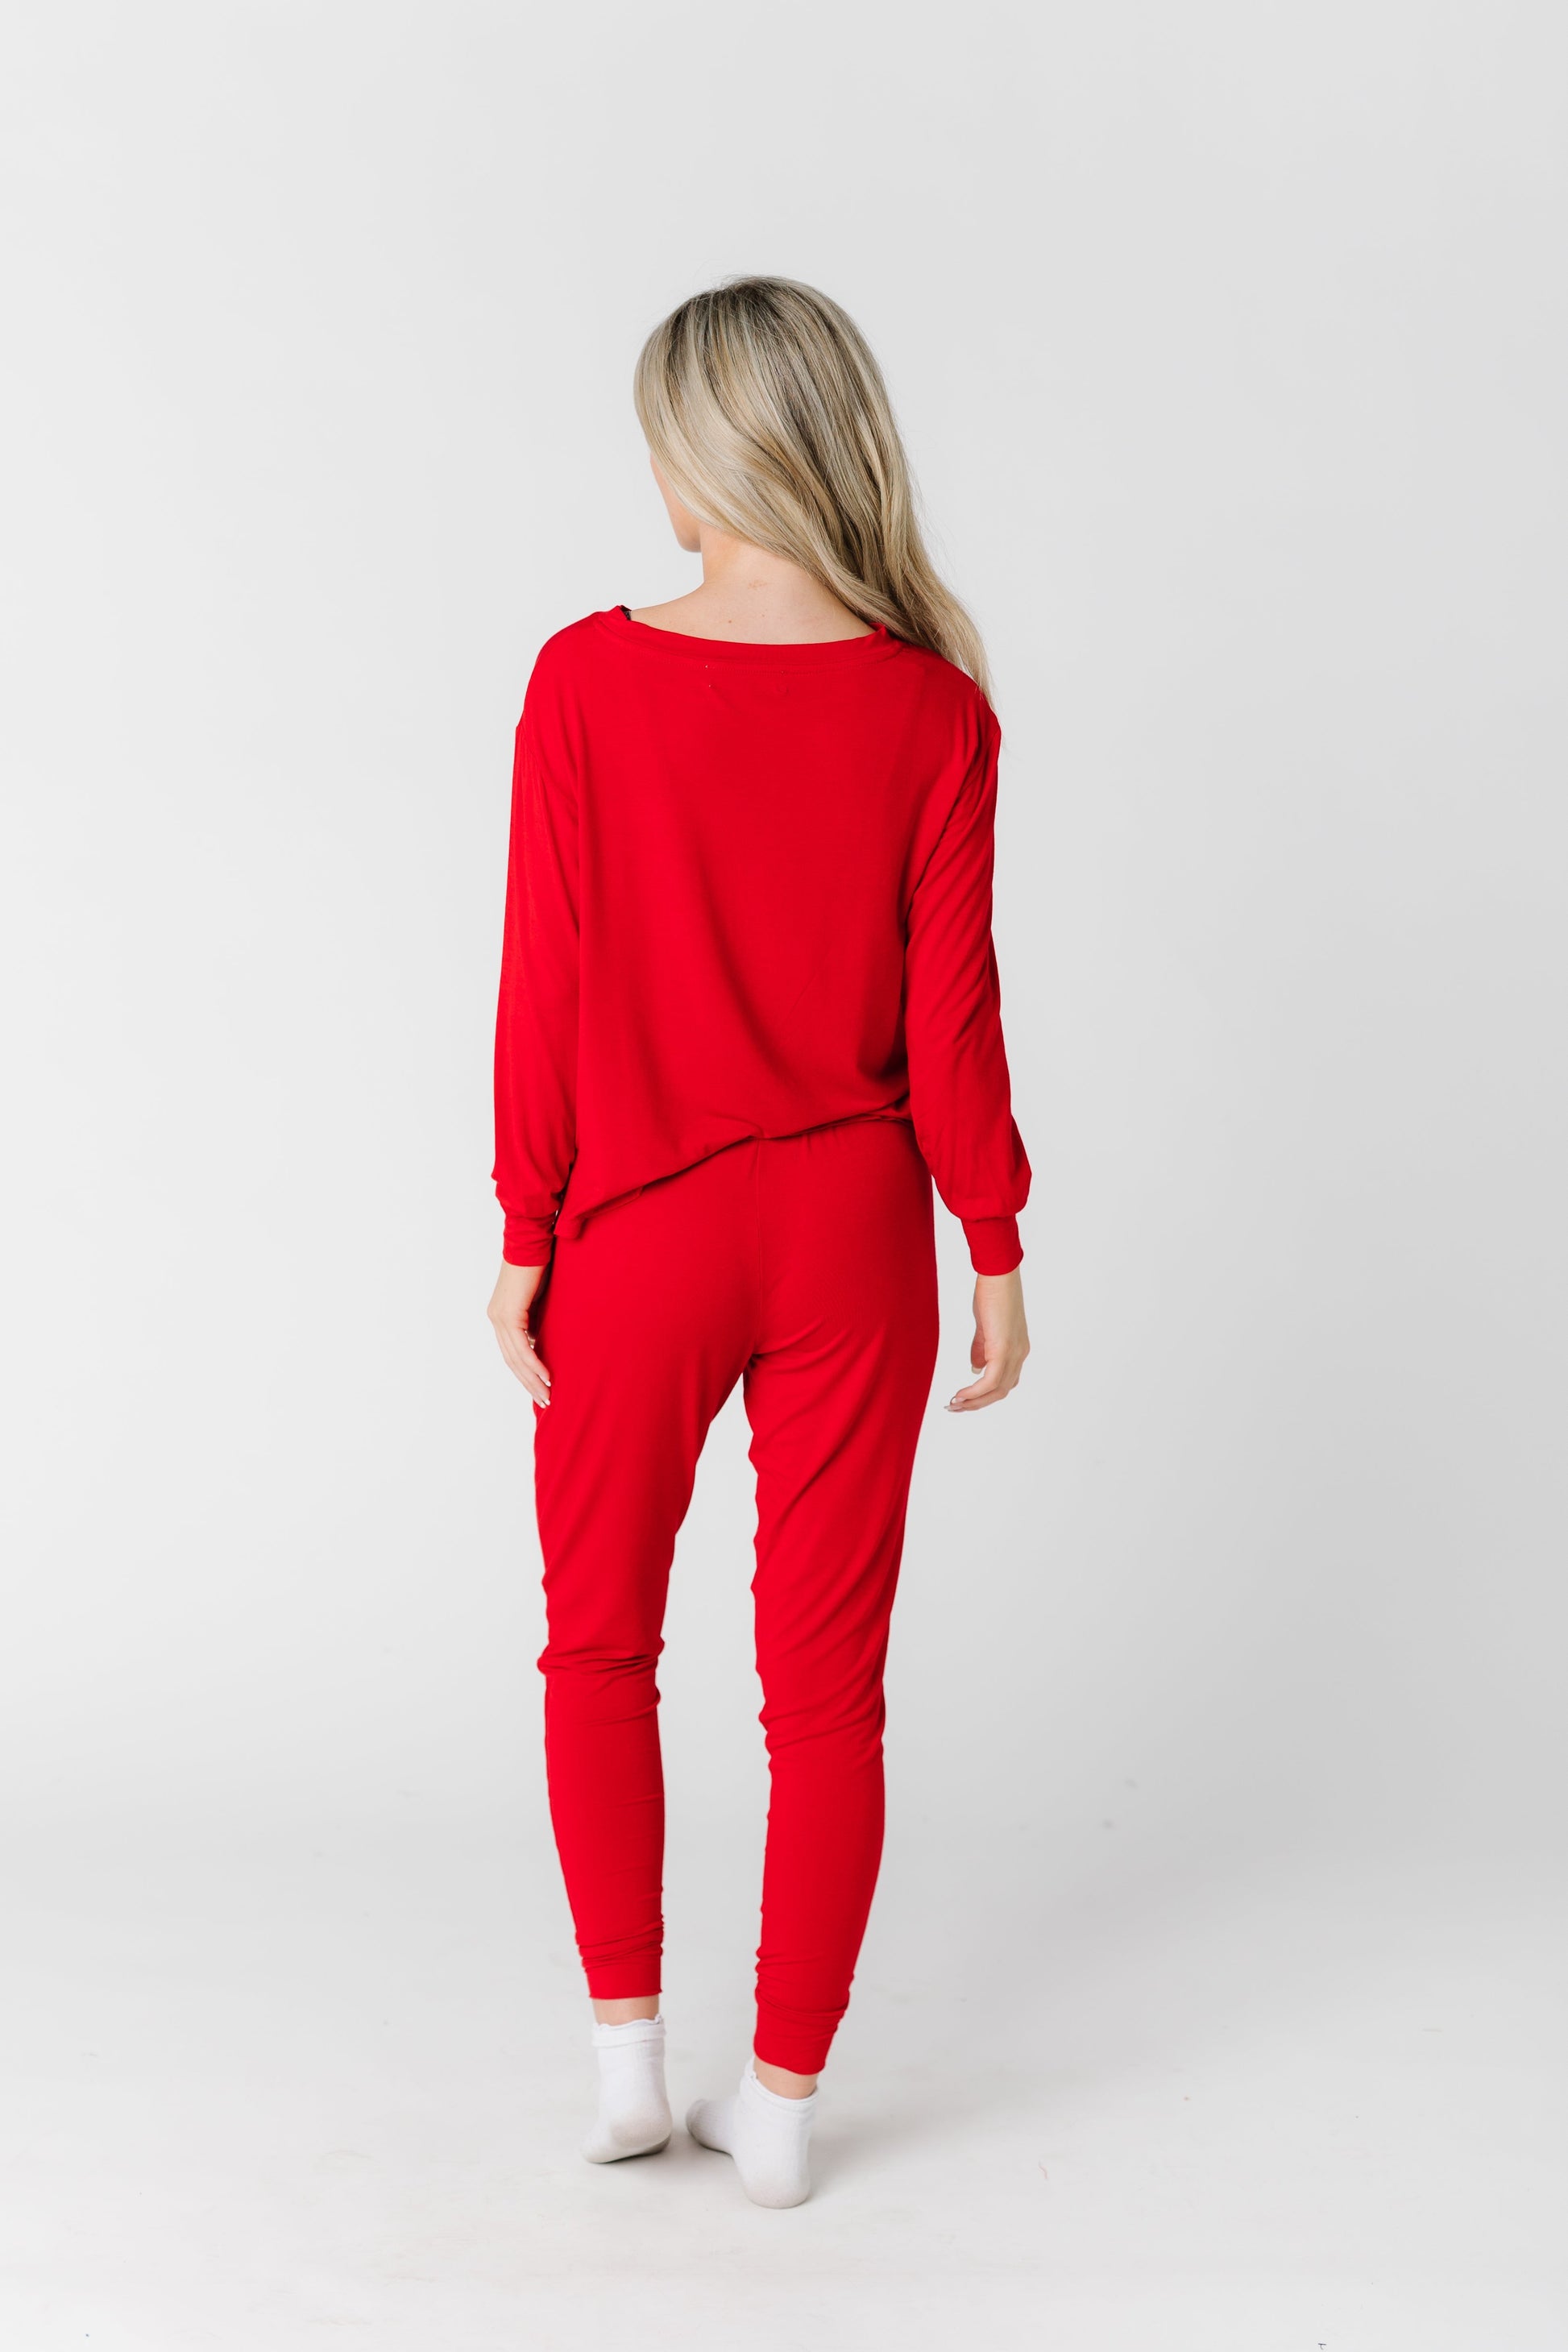 Brass & Roe Luxury Jogger Pajama Set Red / S